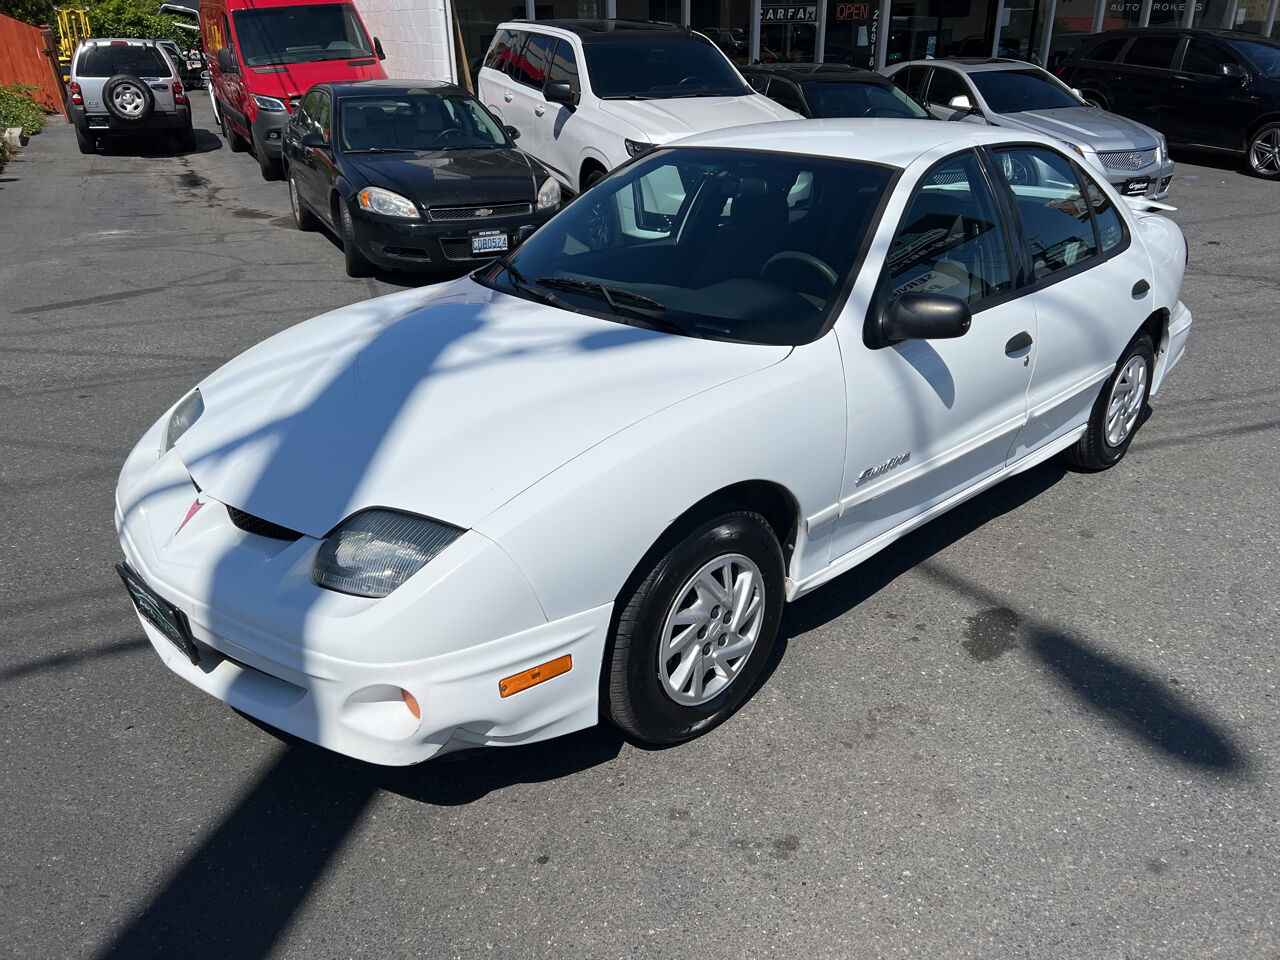 2001 Pontiac Sunfire For Sale In Canton, OH - Carsforsale.com®